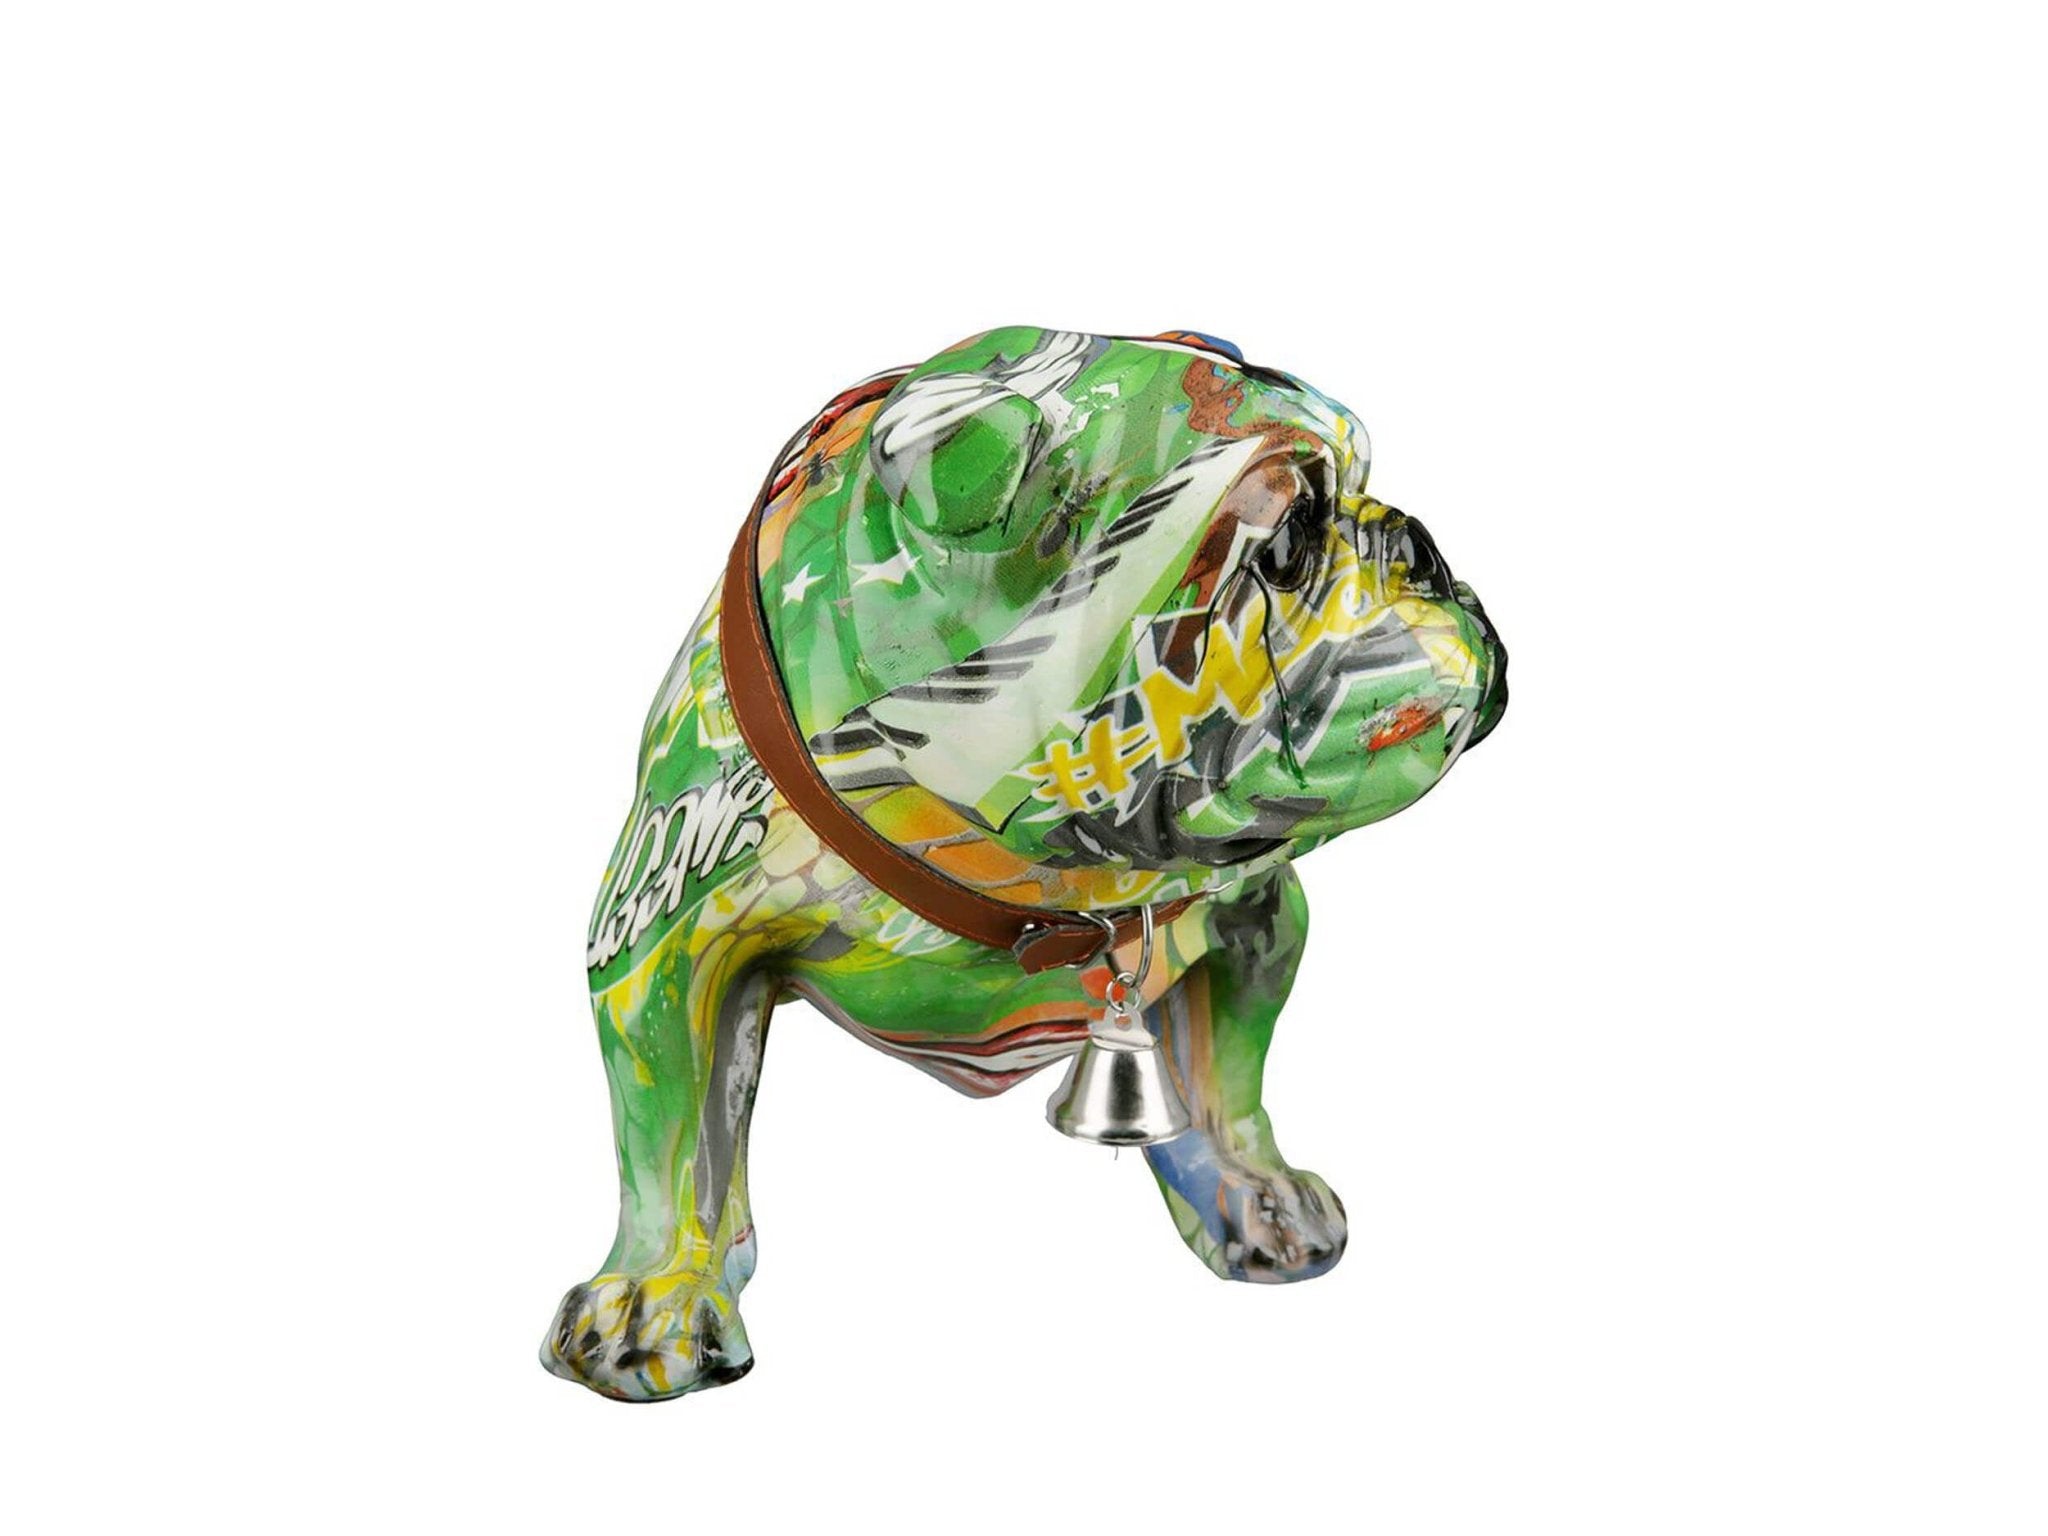 Unieke bulldog sculptuur kopen met levendige groene graffiti kunst